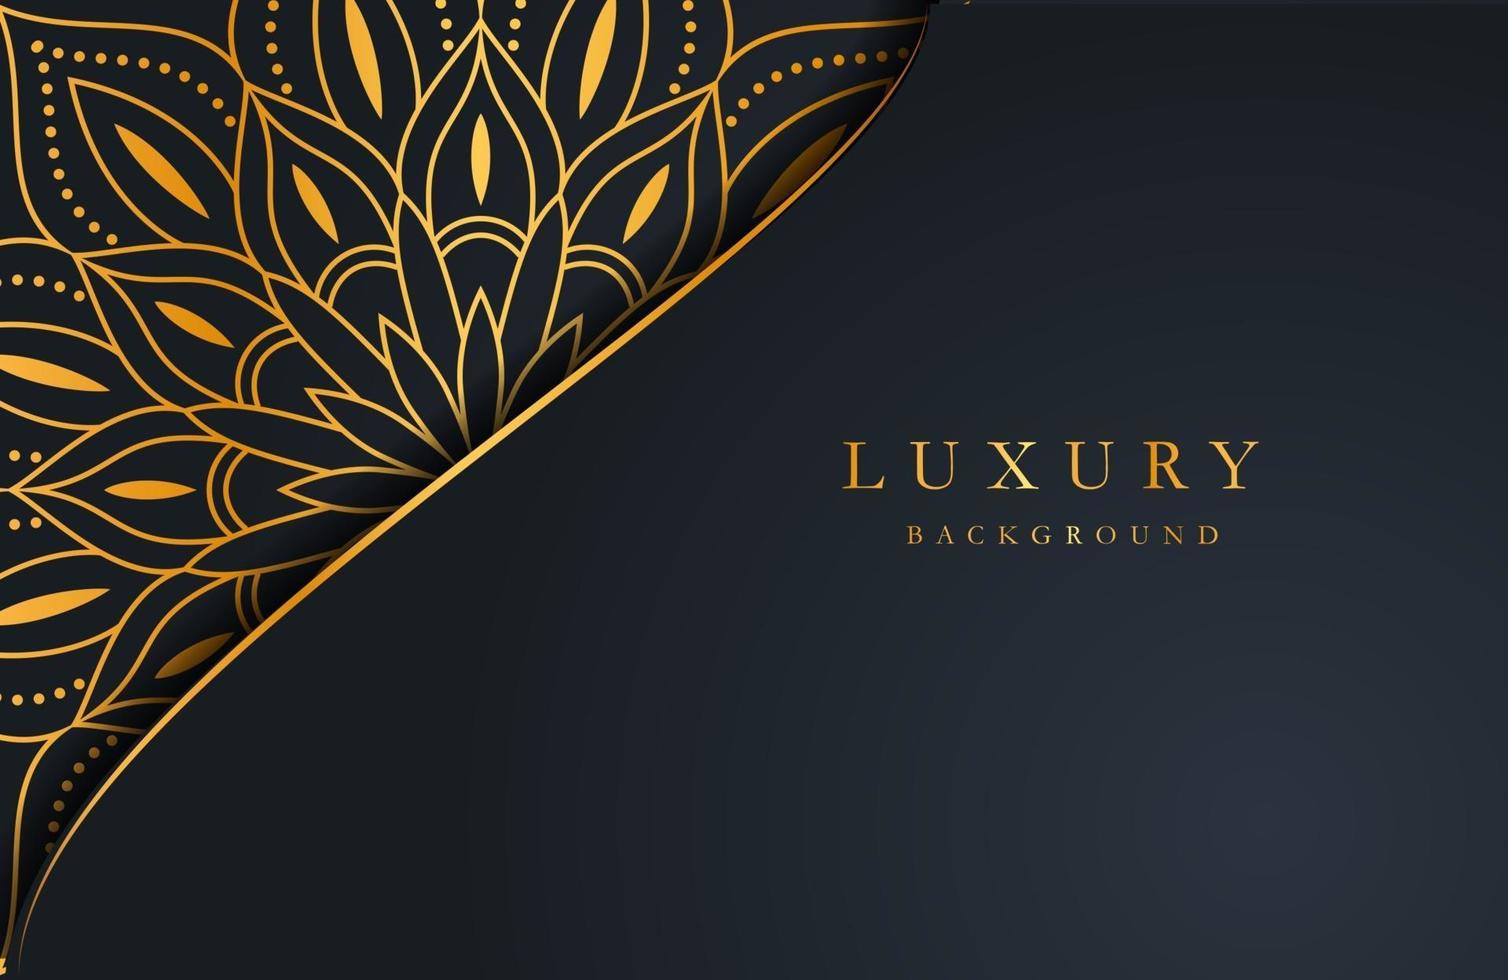 Luxury gold mandala ornate background for wedding invitation, book cover. Arabesque islamic background vector